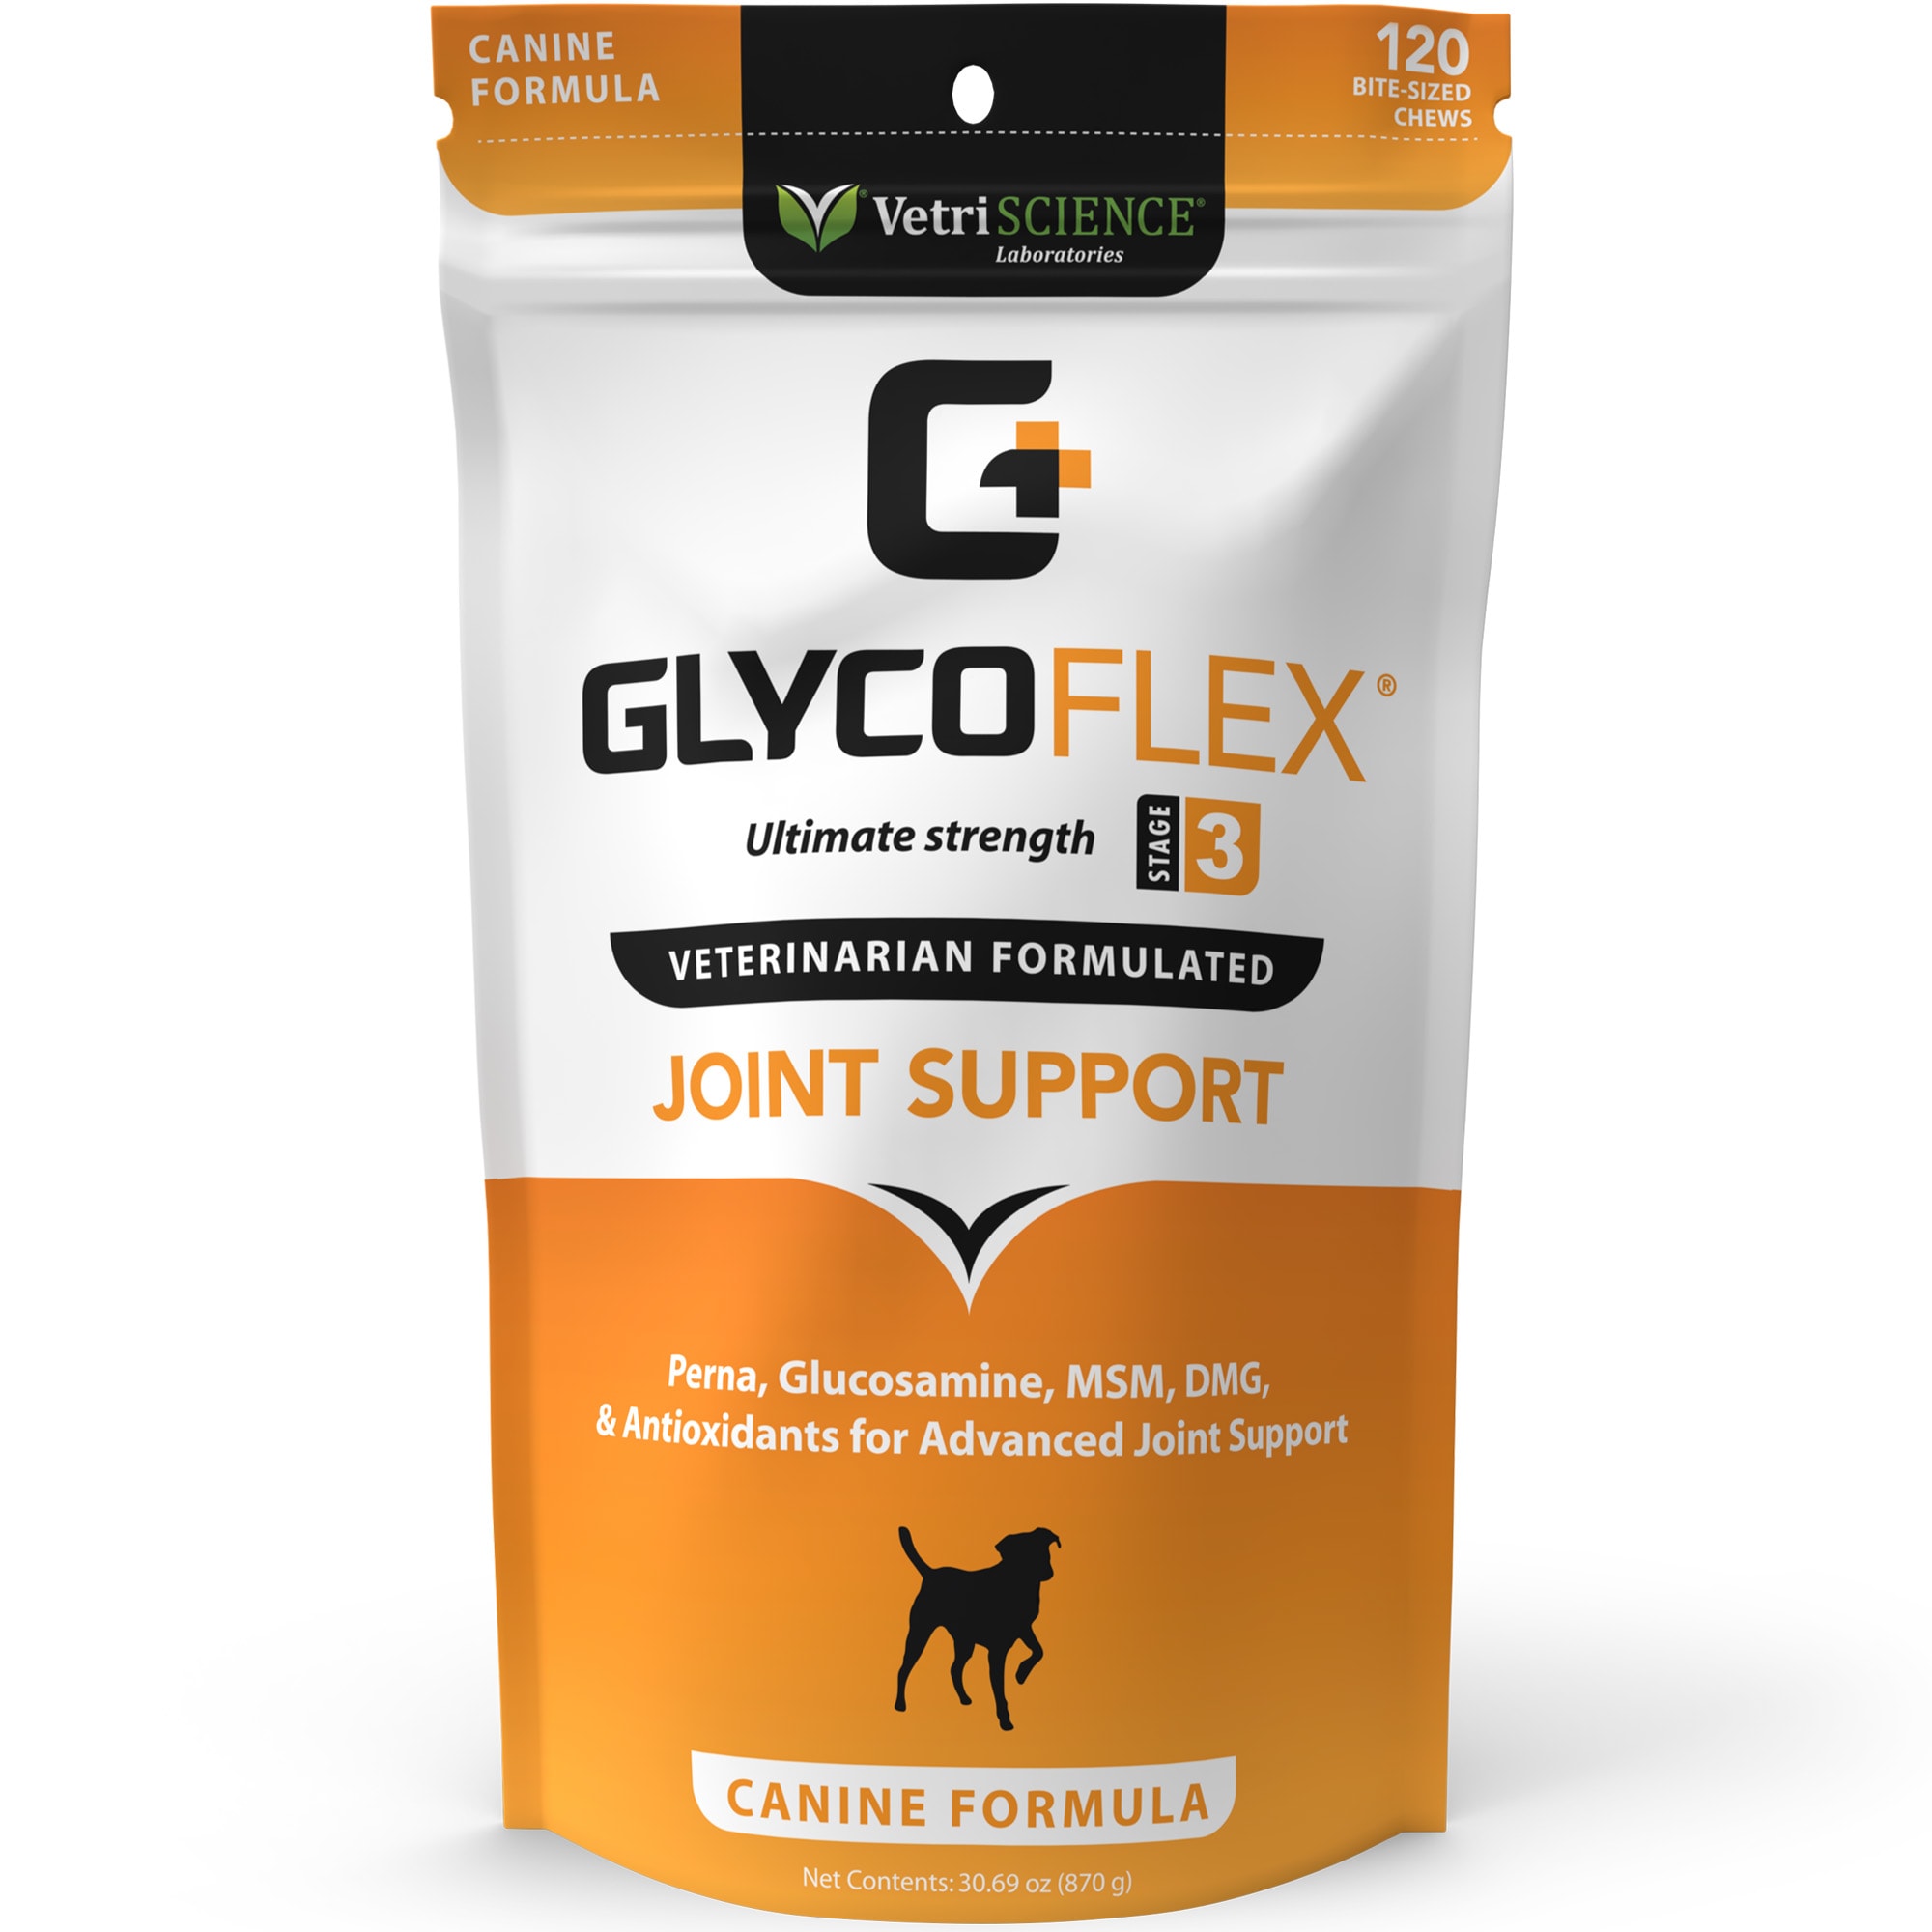 Photos - Other Pet Supplies VetriSCIENCE GlycoFlex 3 Bite-Sized Dog Chews, Count of 120, 